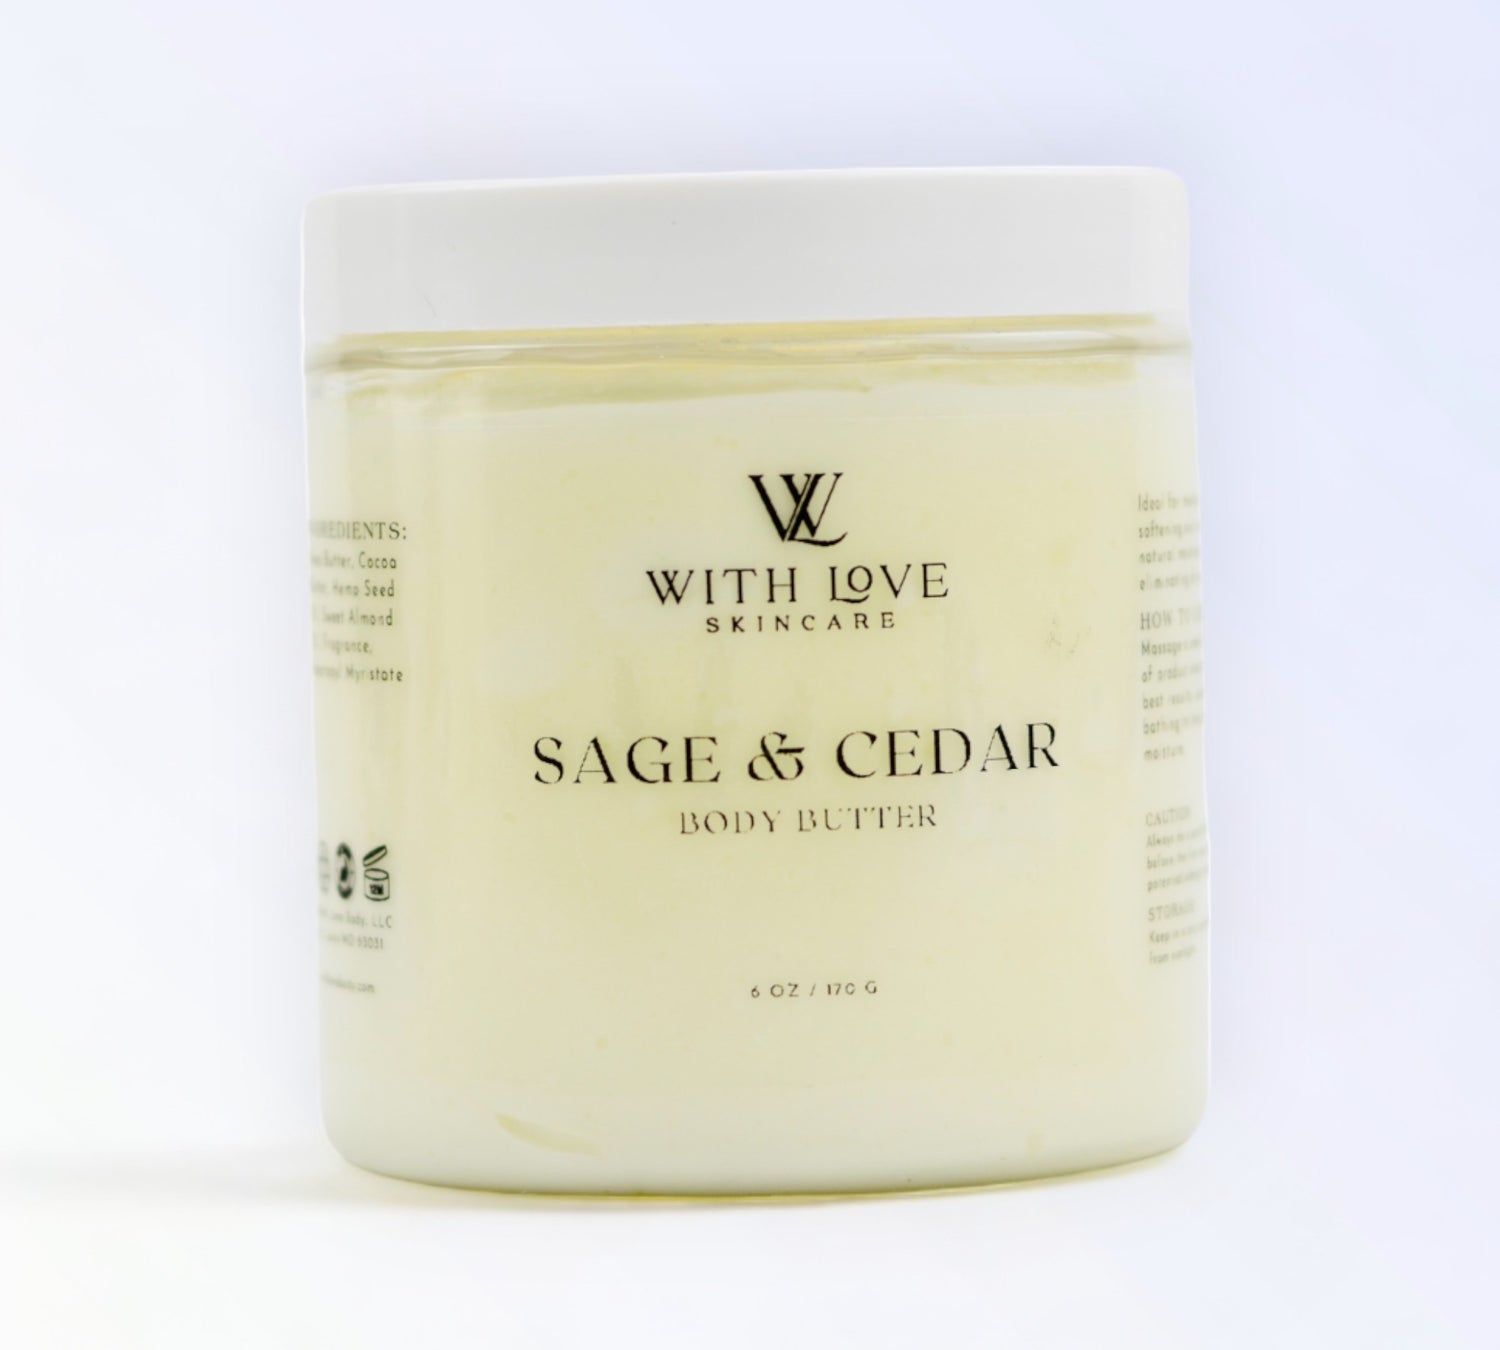 Sage & Cedar Body Butter